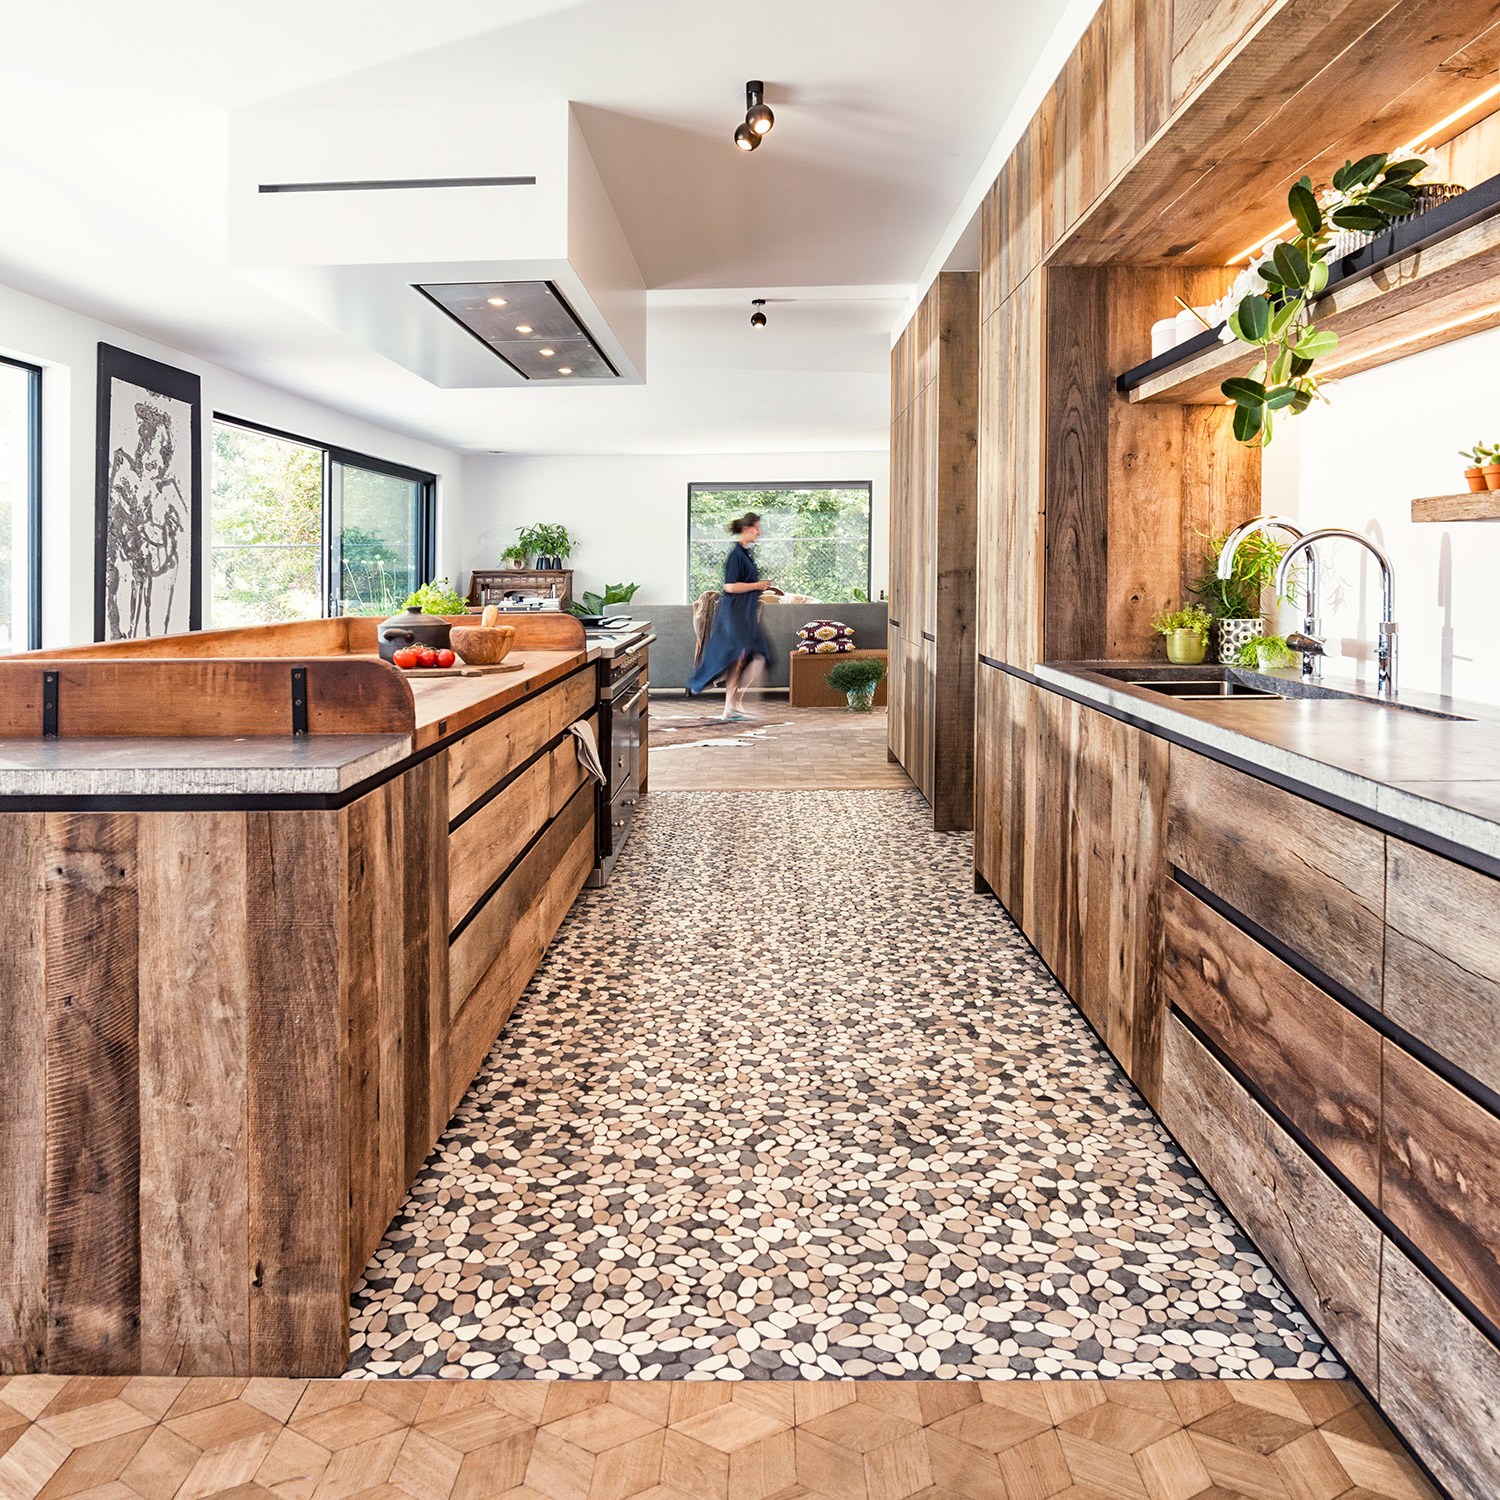 teugels telex Avonturier massieve houten keukens op maat - Woontheater